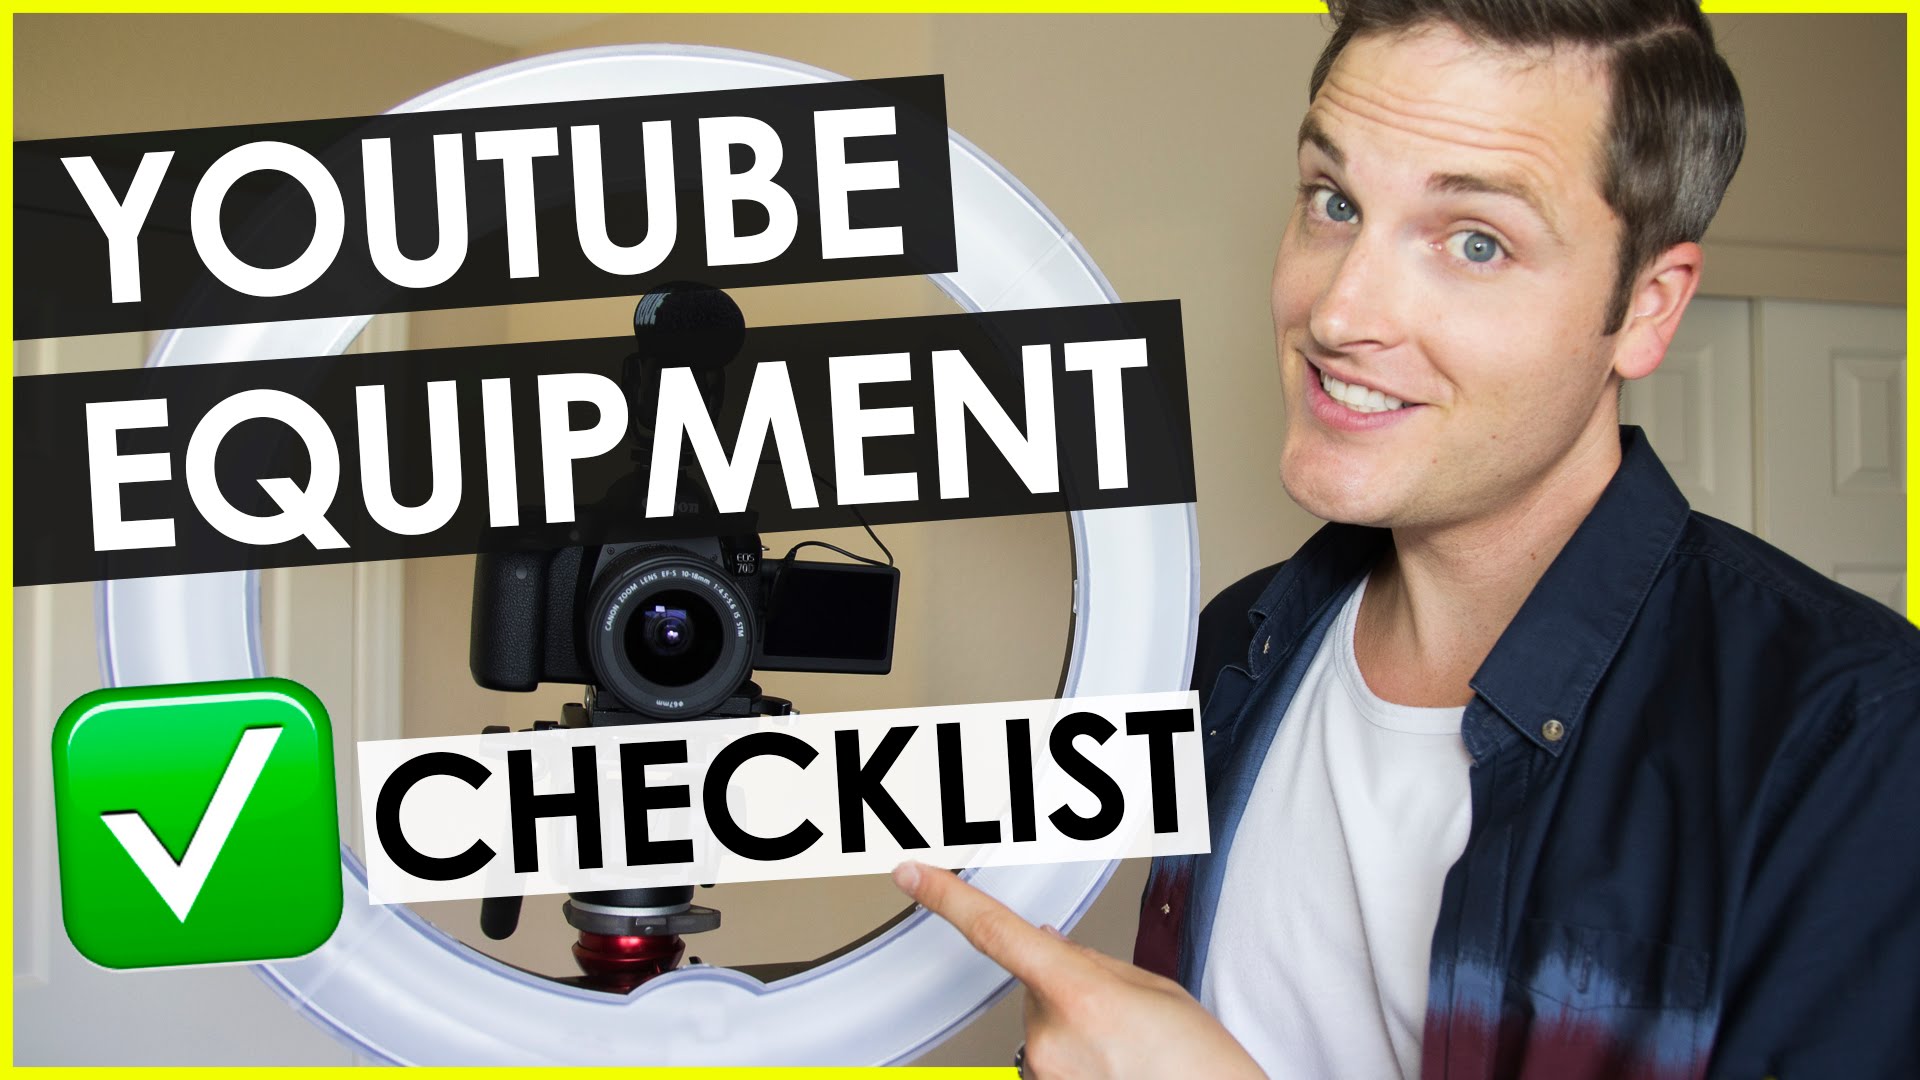 YouTube Equipment List for Making Videos